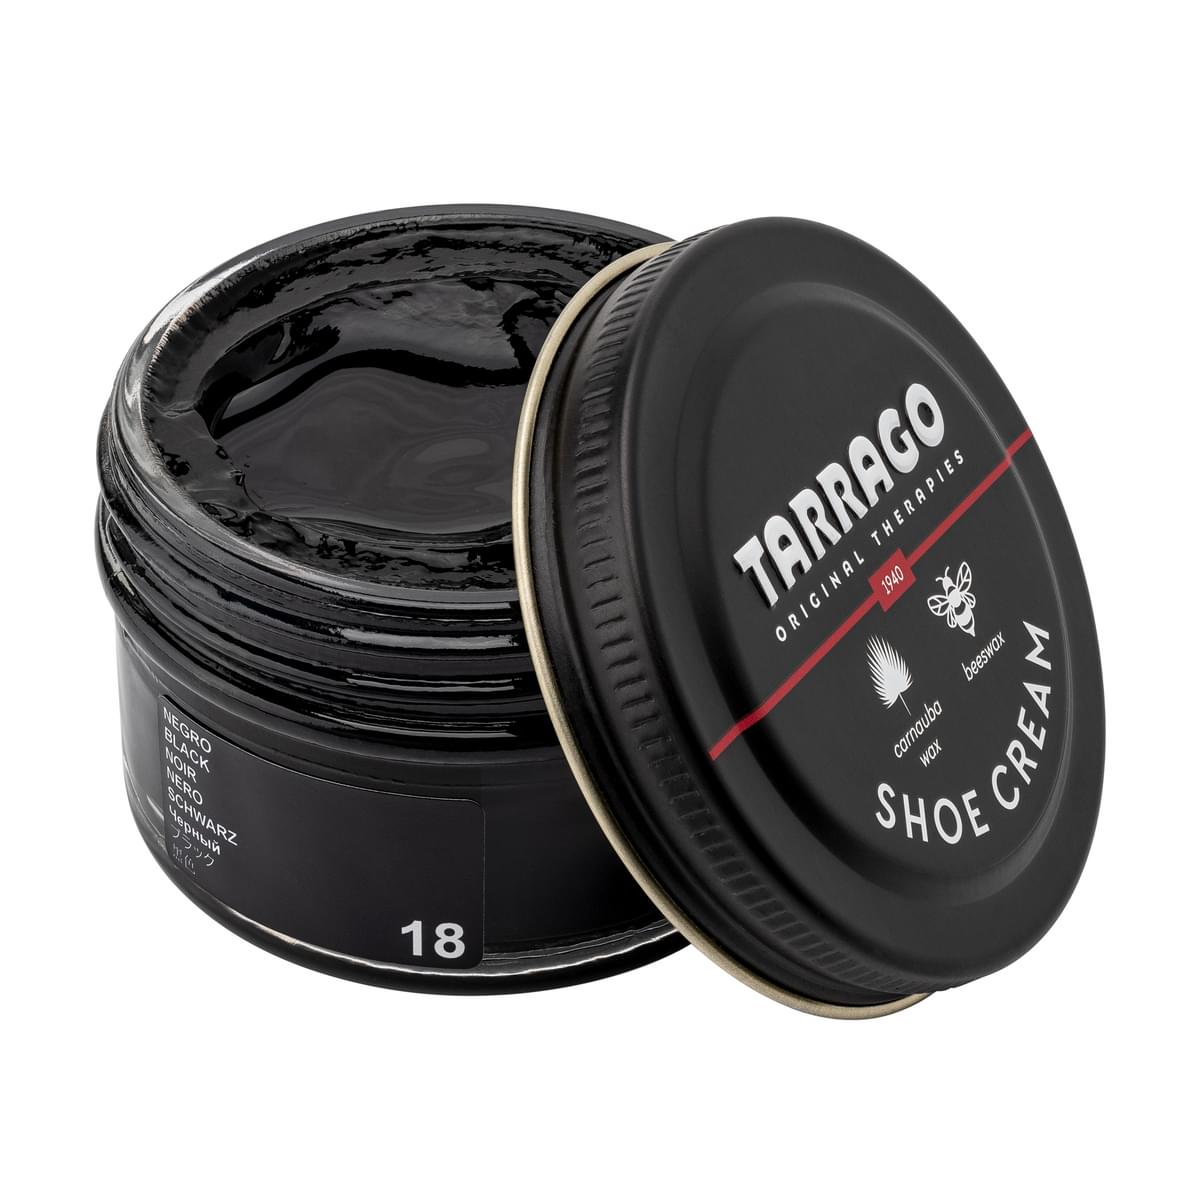 Tarrago Shoe Cream  - Black - 18